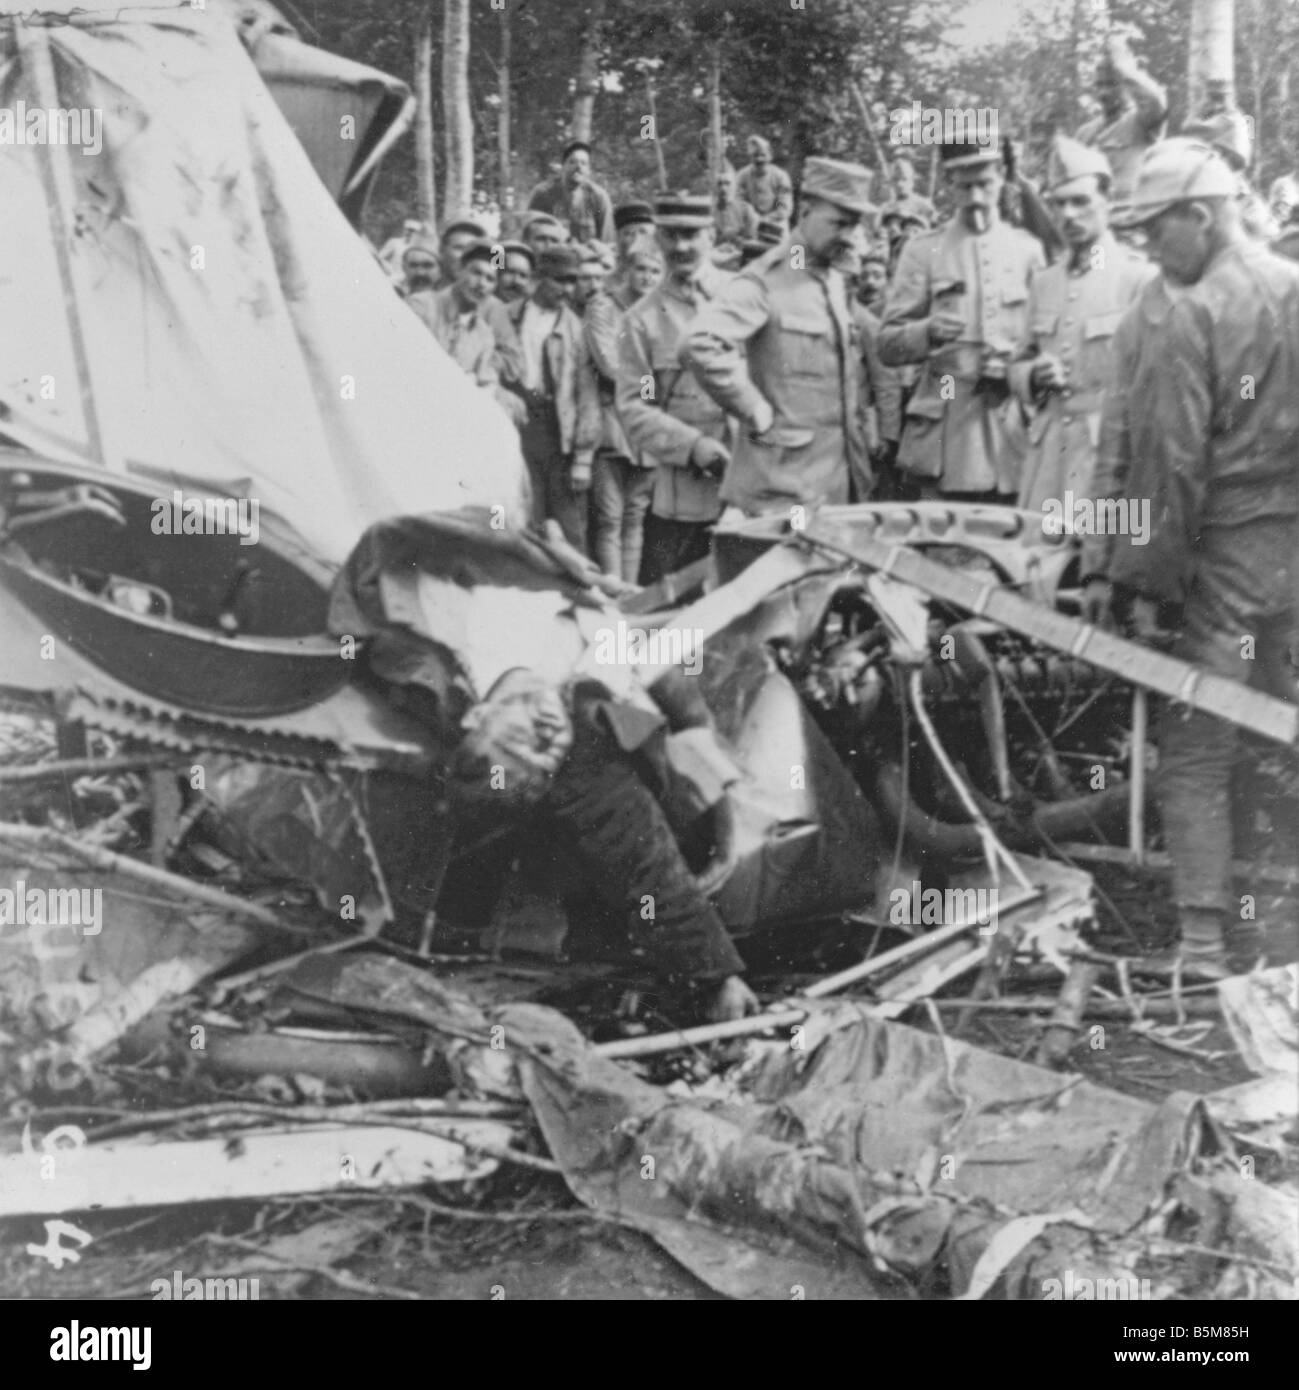 2 G55 B1 1915 17 Crashed German Plane World War One History World War One Aerial Warfare Avion allemand descendu devant Verdun F Stock Photo